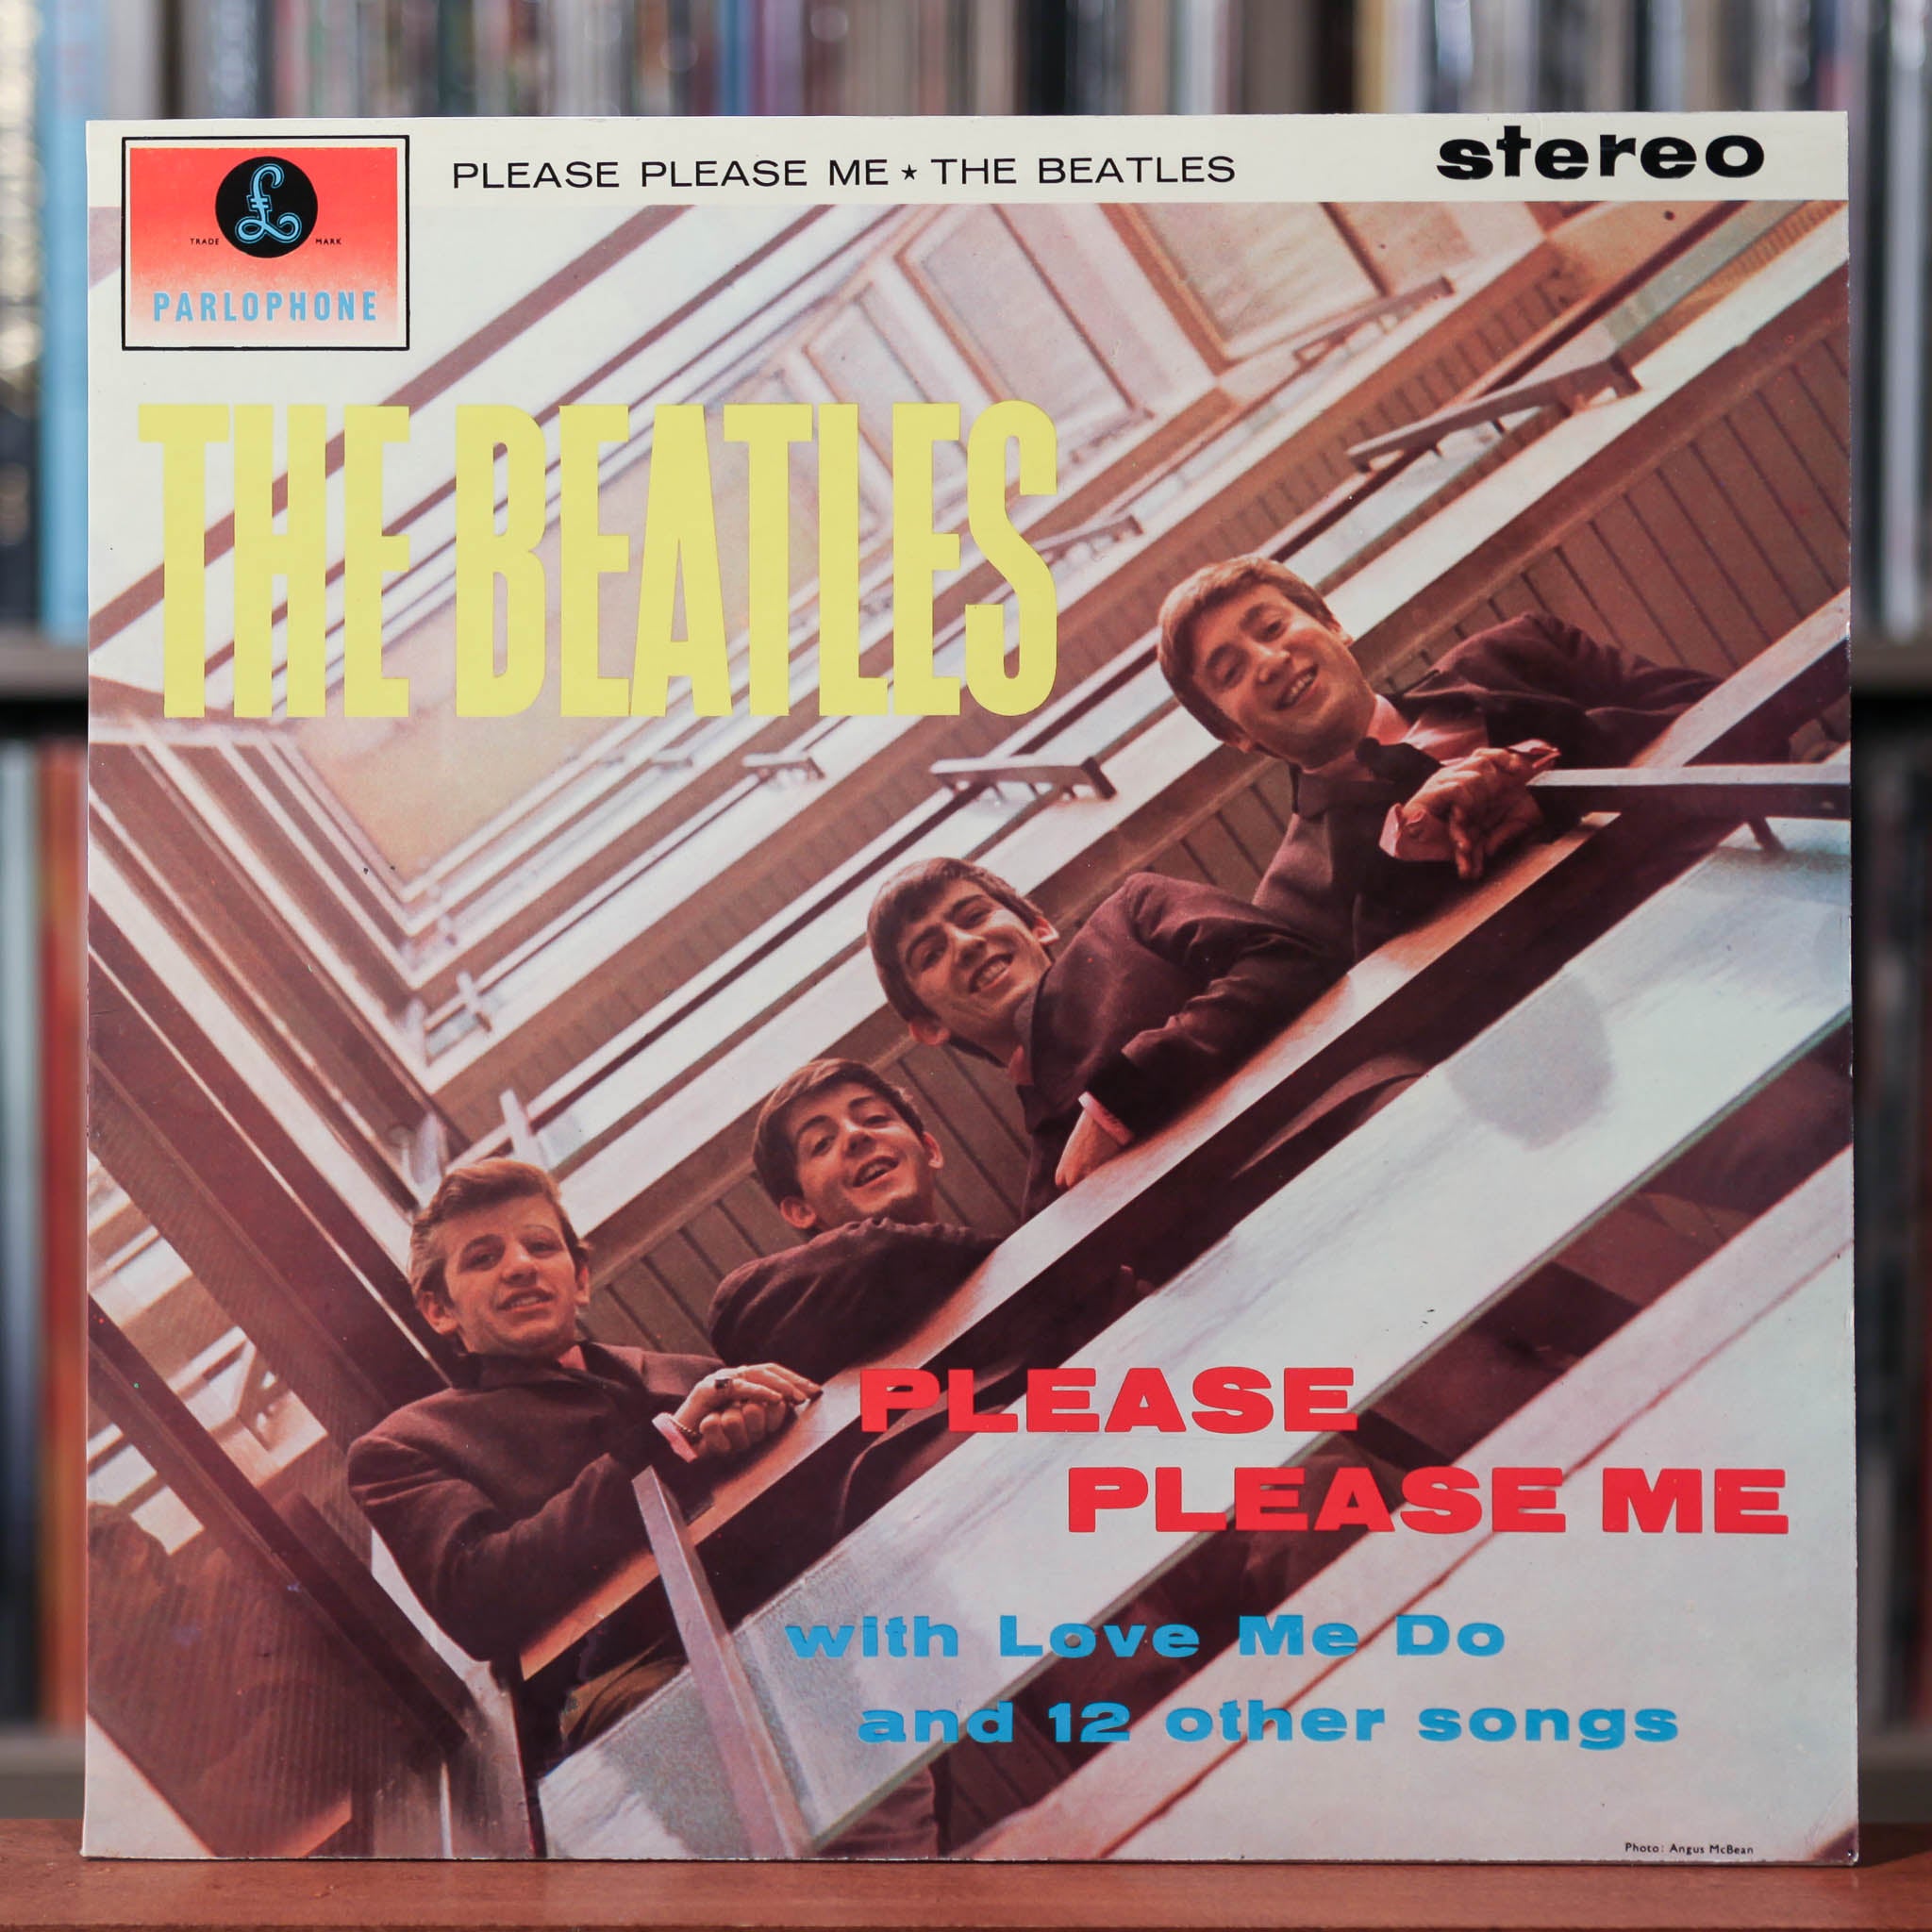 The Beatles - Please Please Me - UK Import - 1976 Parlophone, EX/EX